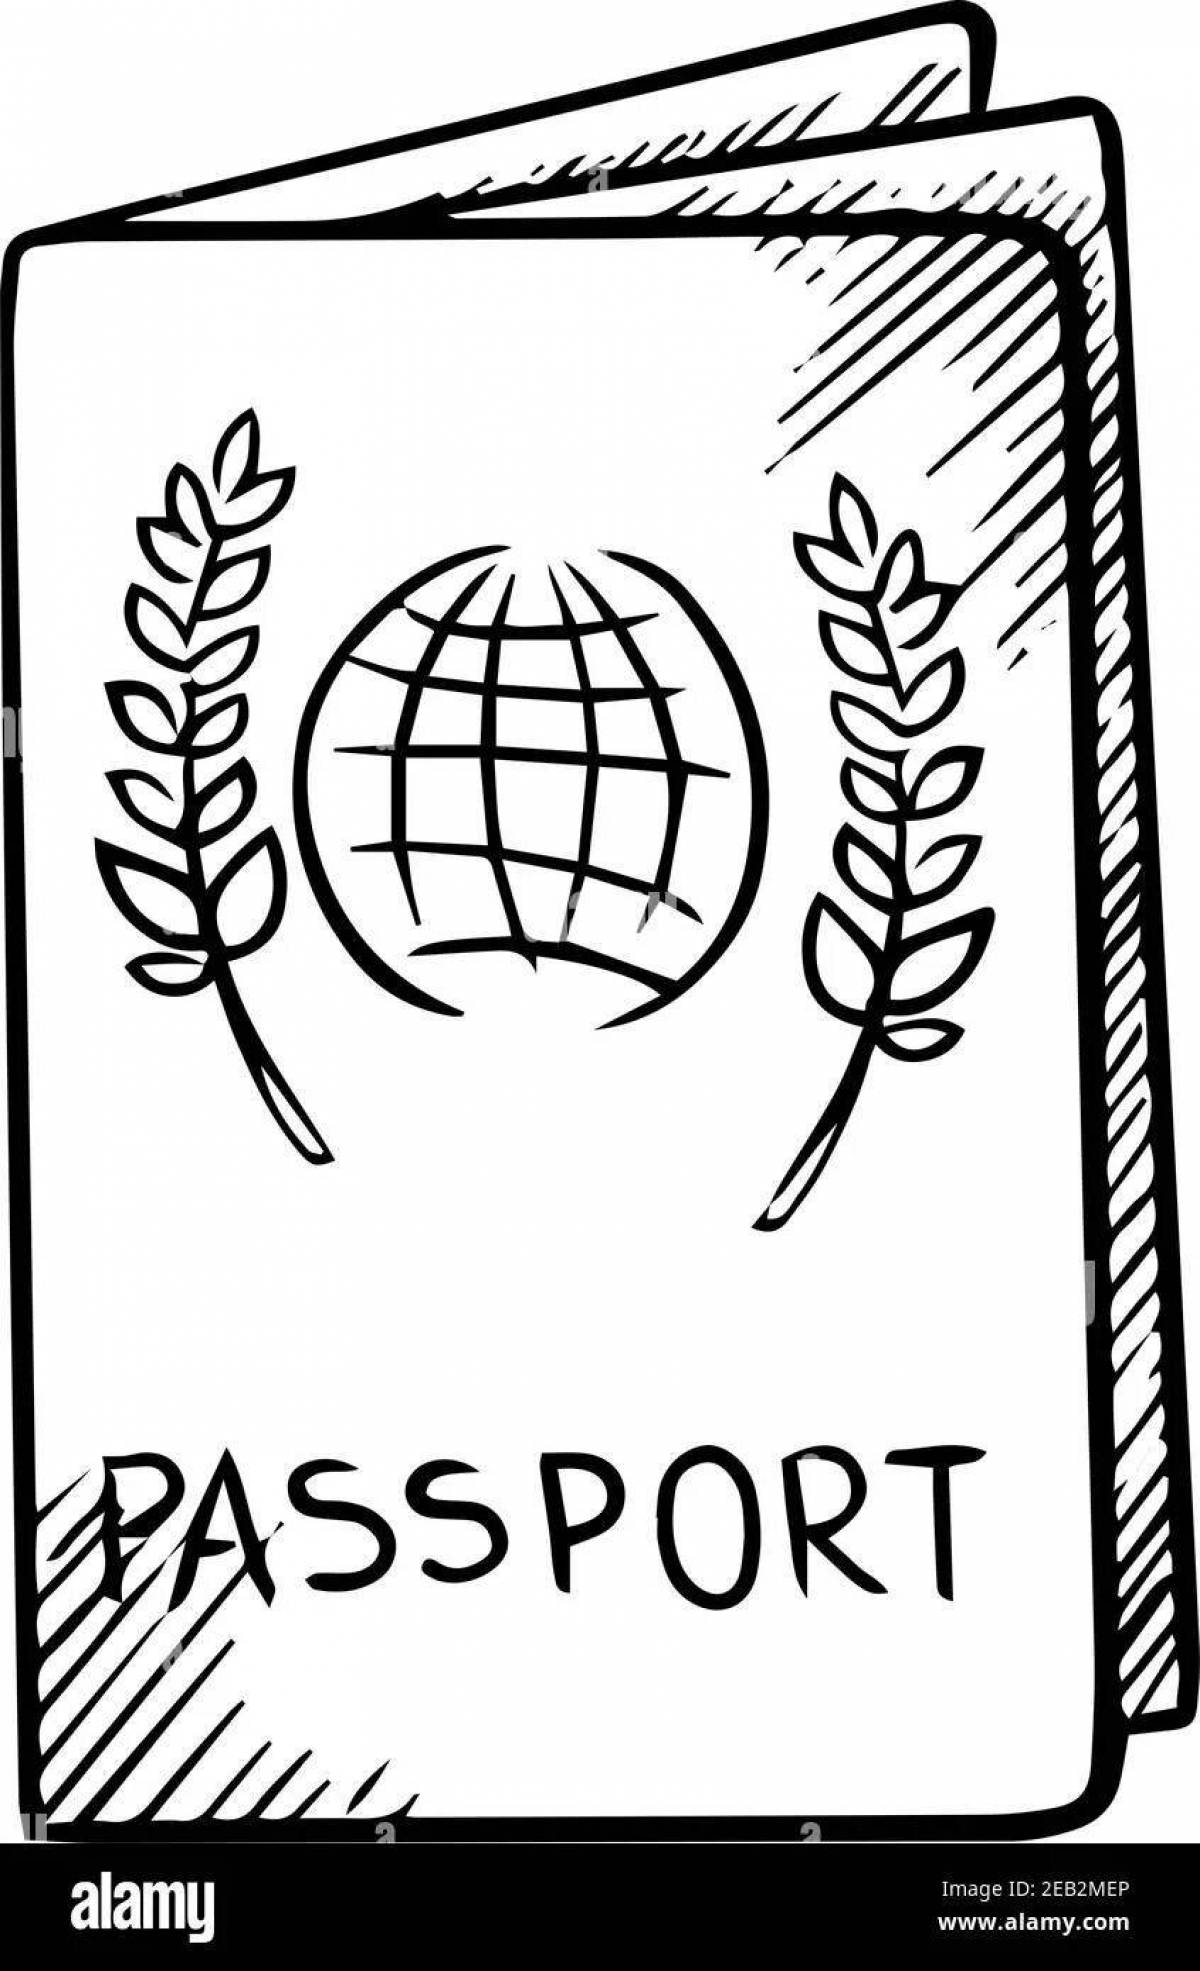 Passport раскраска